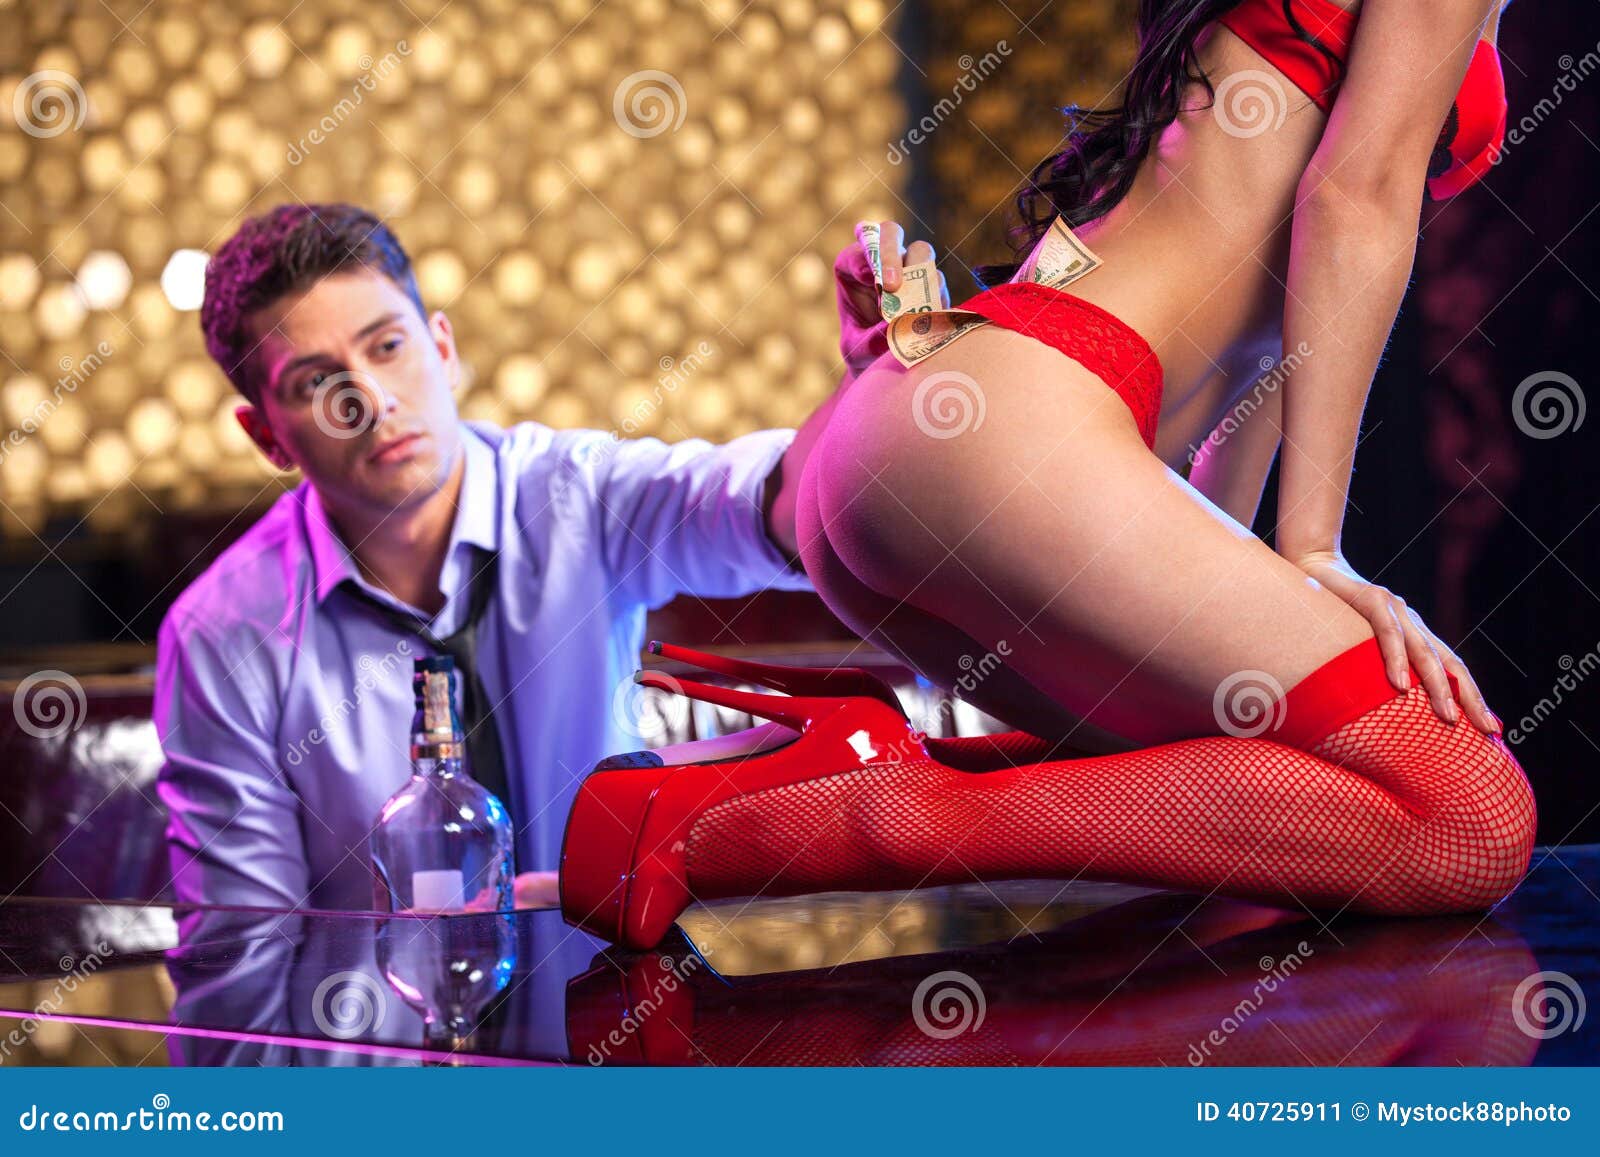 Young Man Putting Dollars in Striptease Dancer Panties